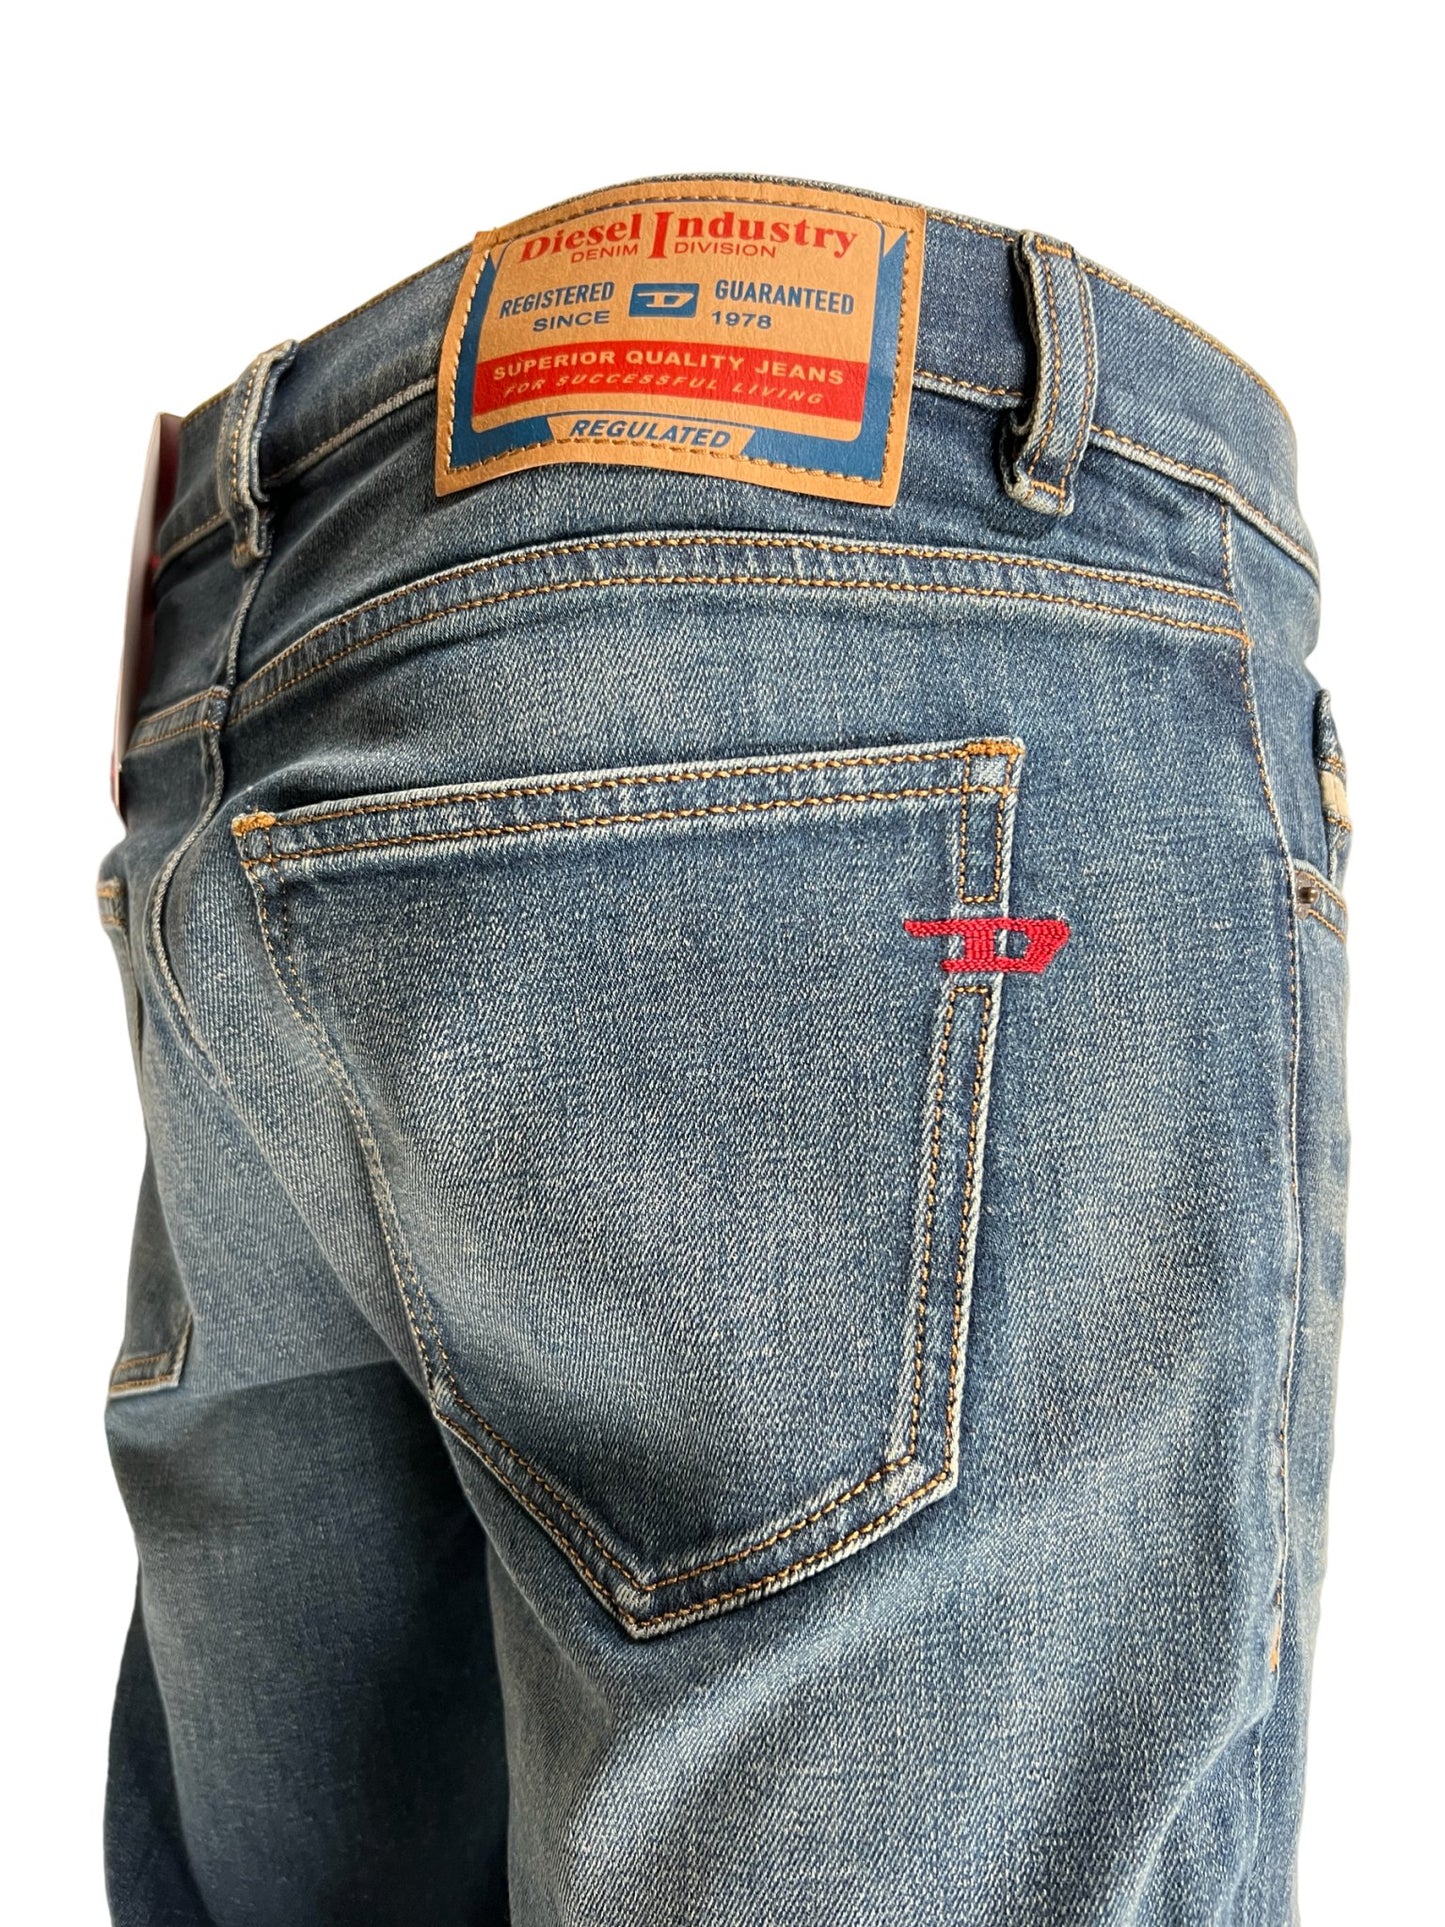 The back pocket of a pair of DIESEL 1979 SLEENKER 9H69 DENIM jeans.